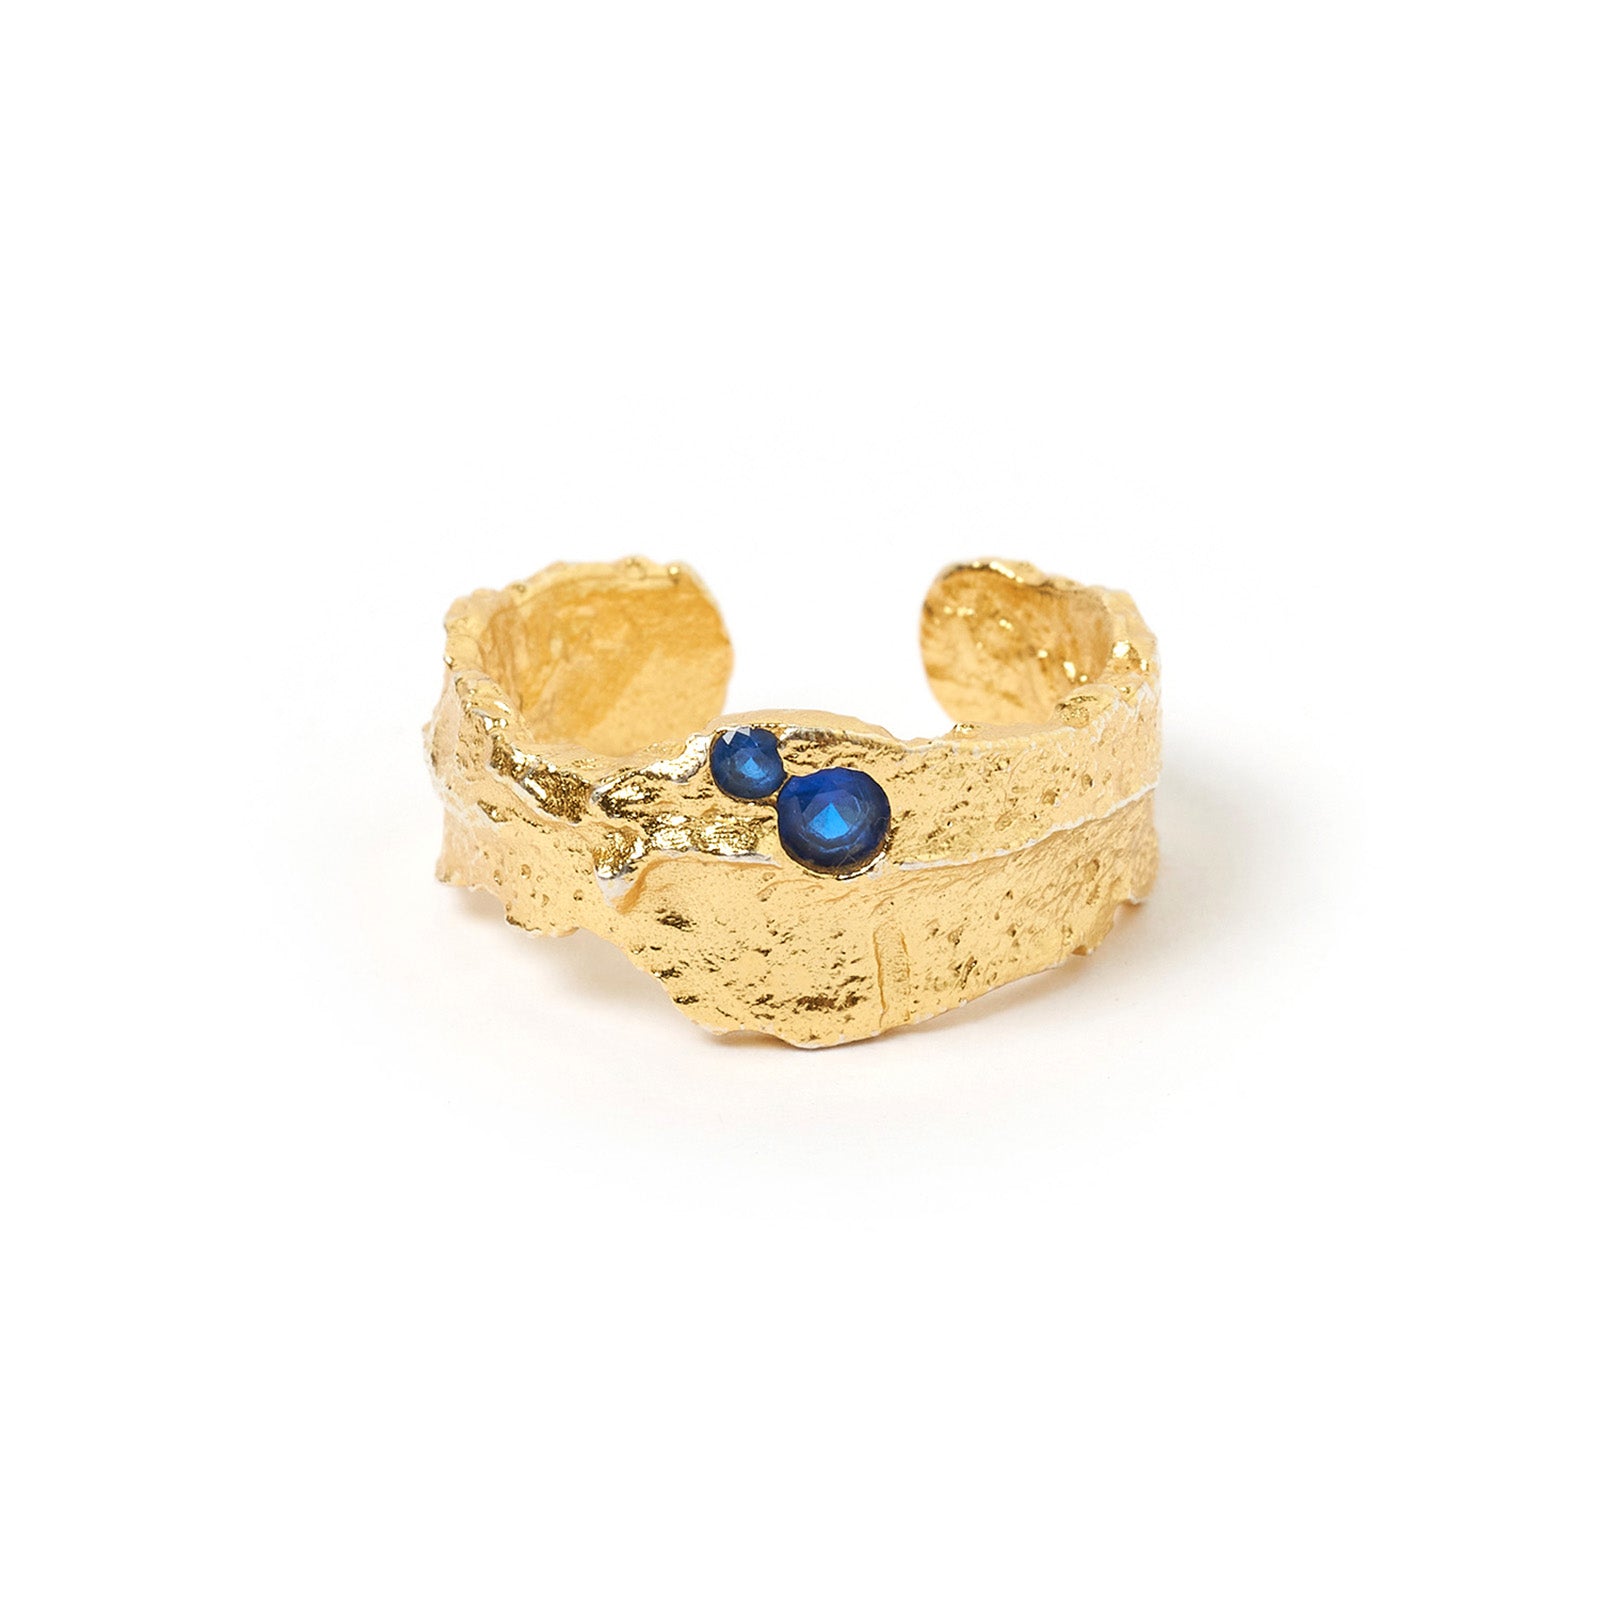 Anya Gold and Blue Ring